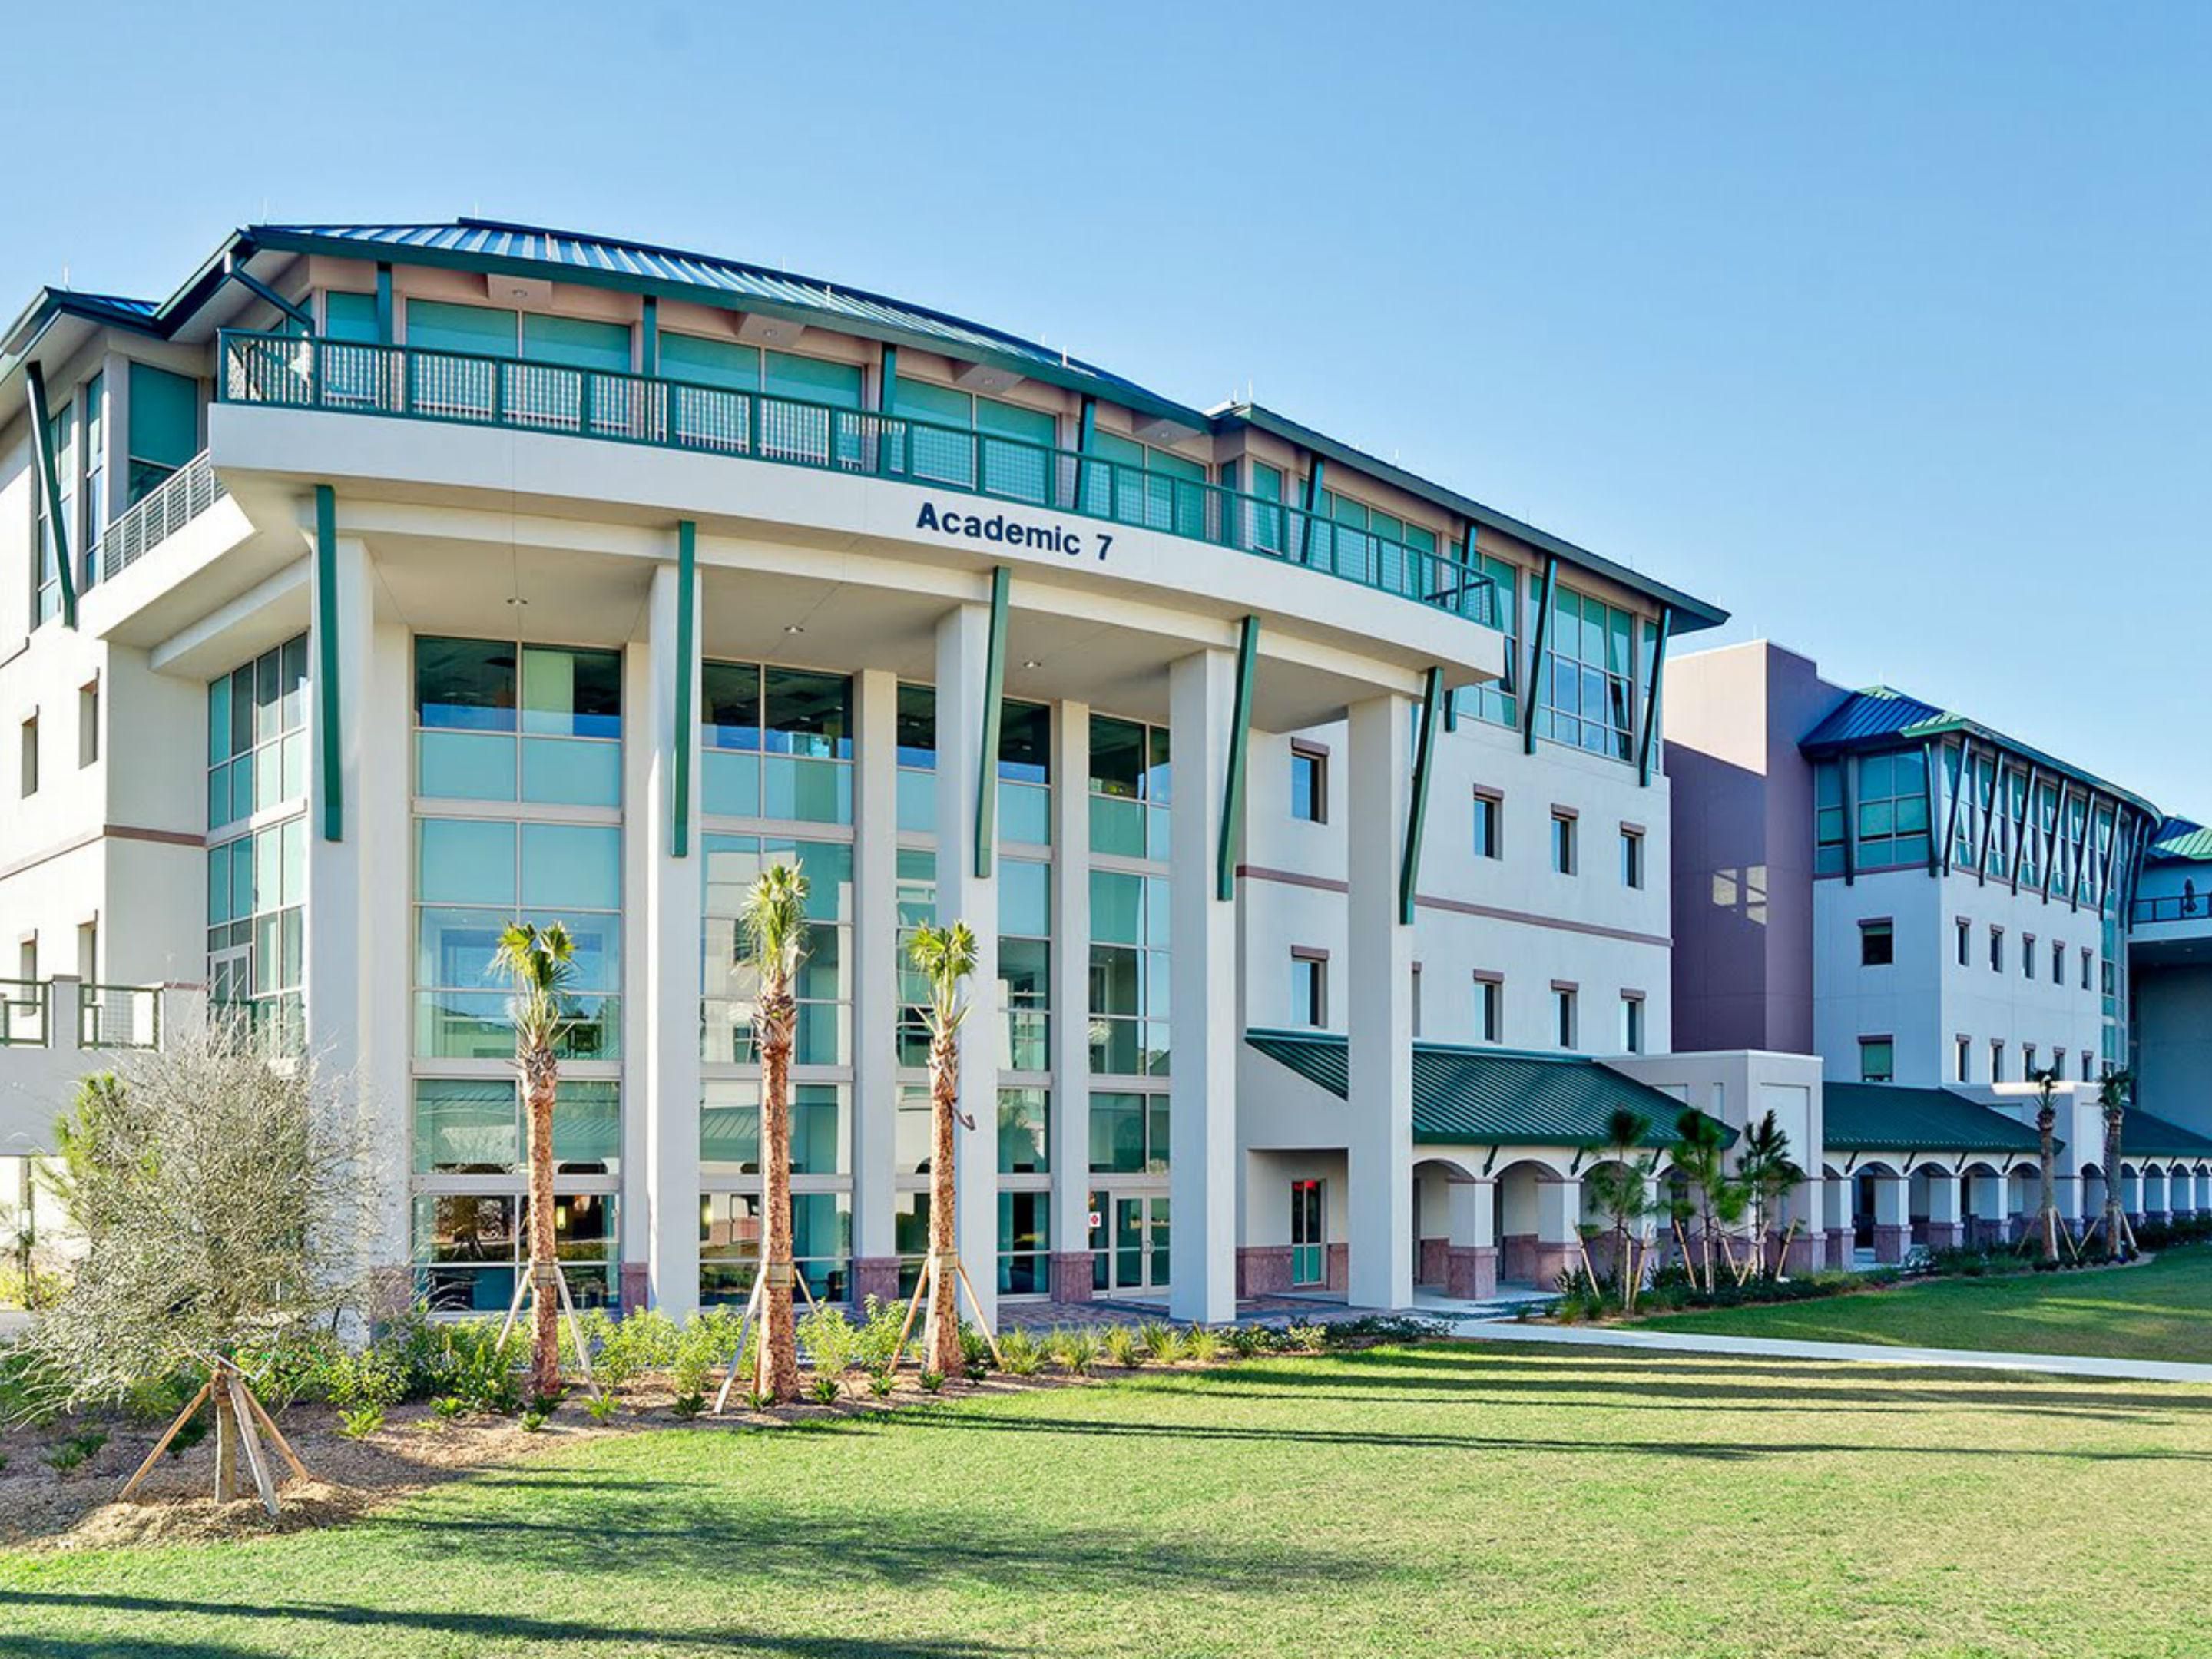 FGCU-Florida Gulf Coast University Campus is close by